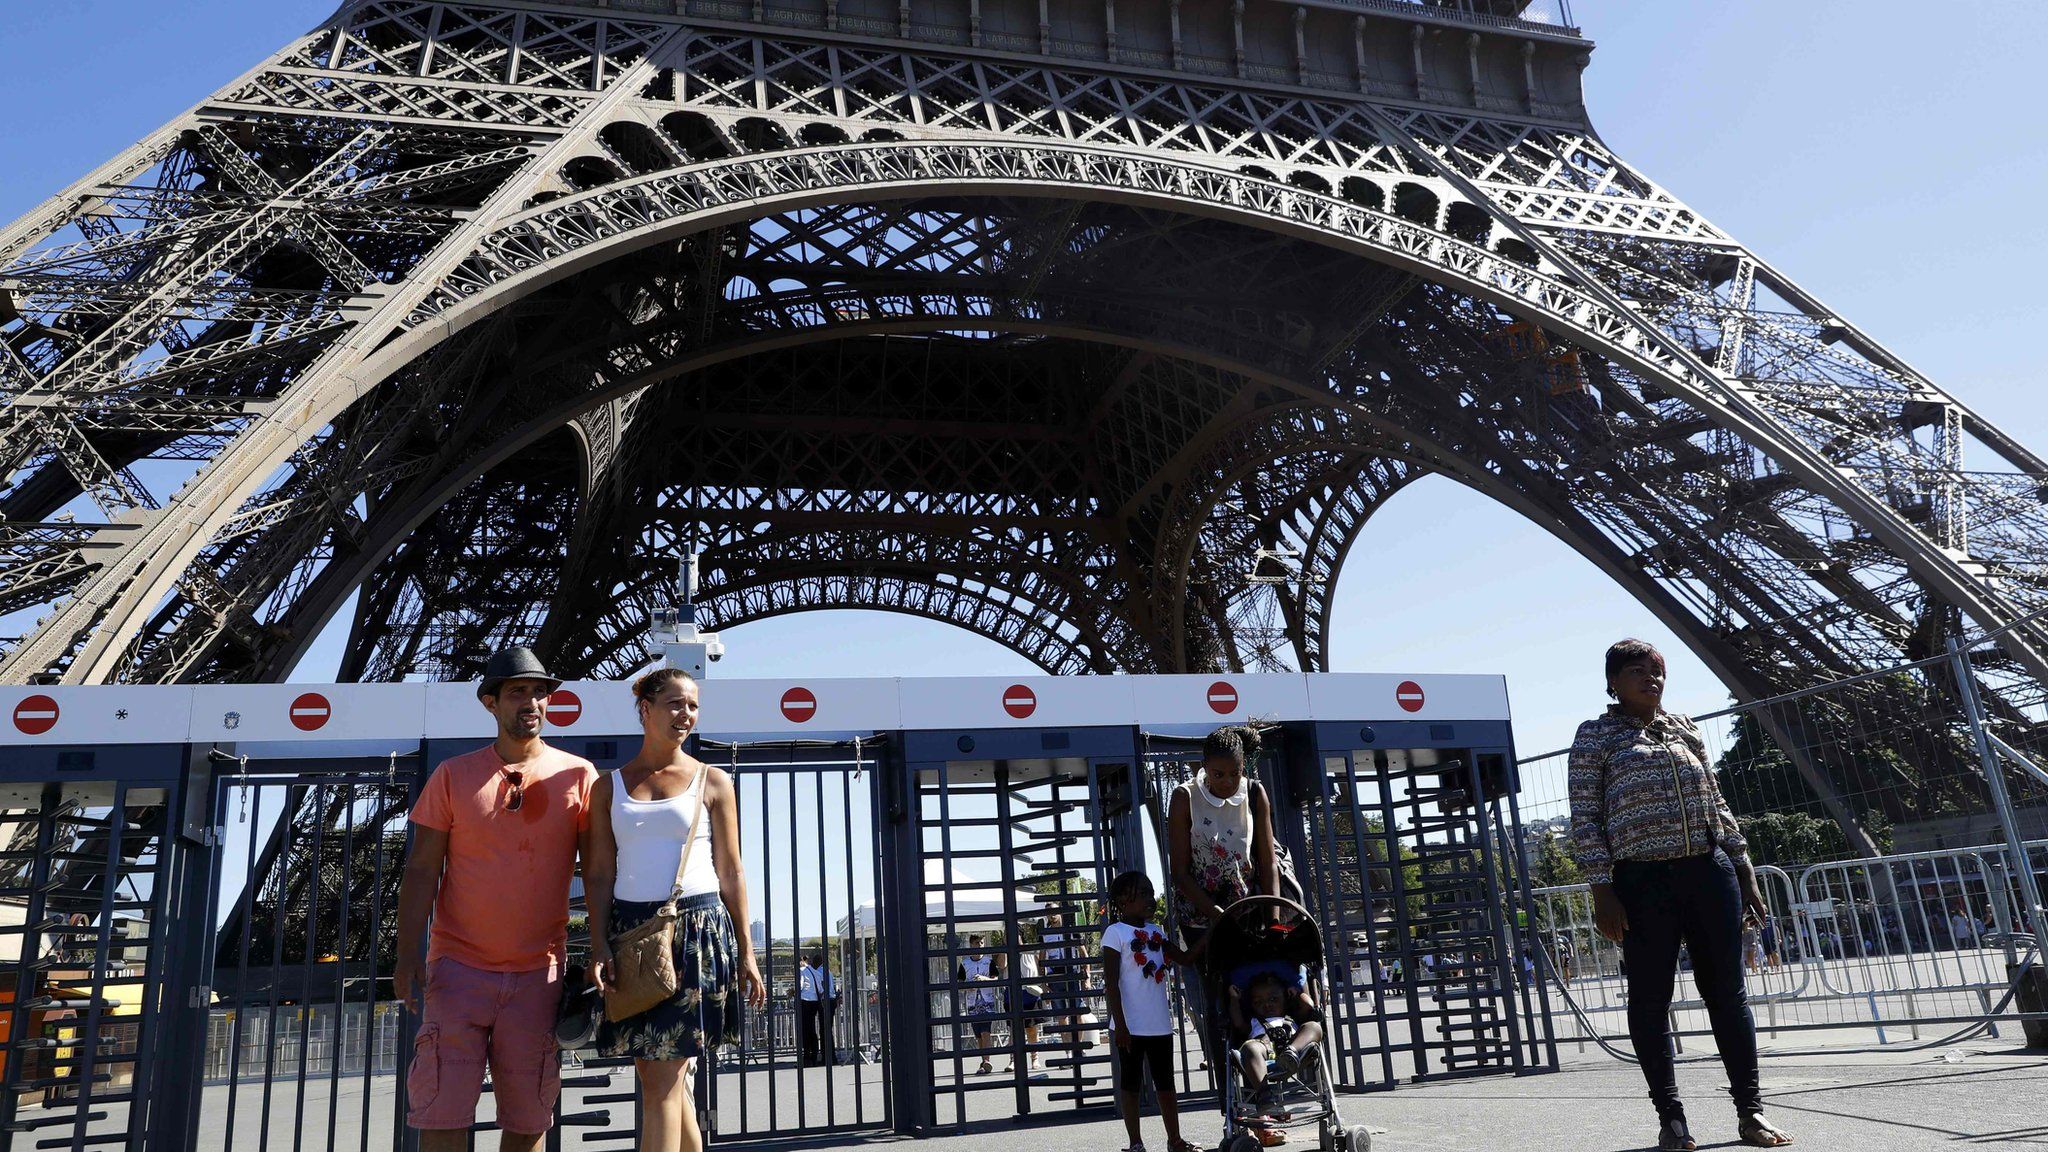 Security gates at the Eiffel Tower, Paris. 24 August 2016